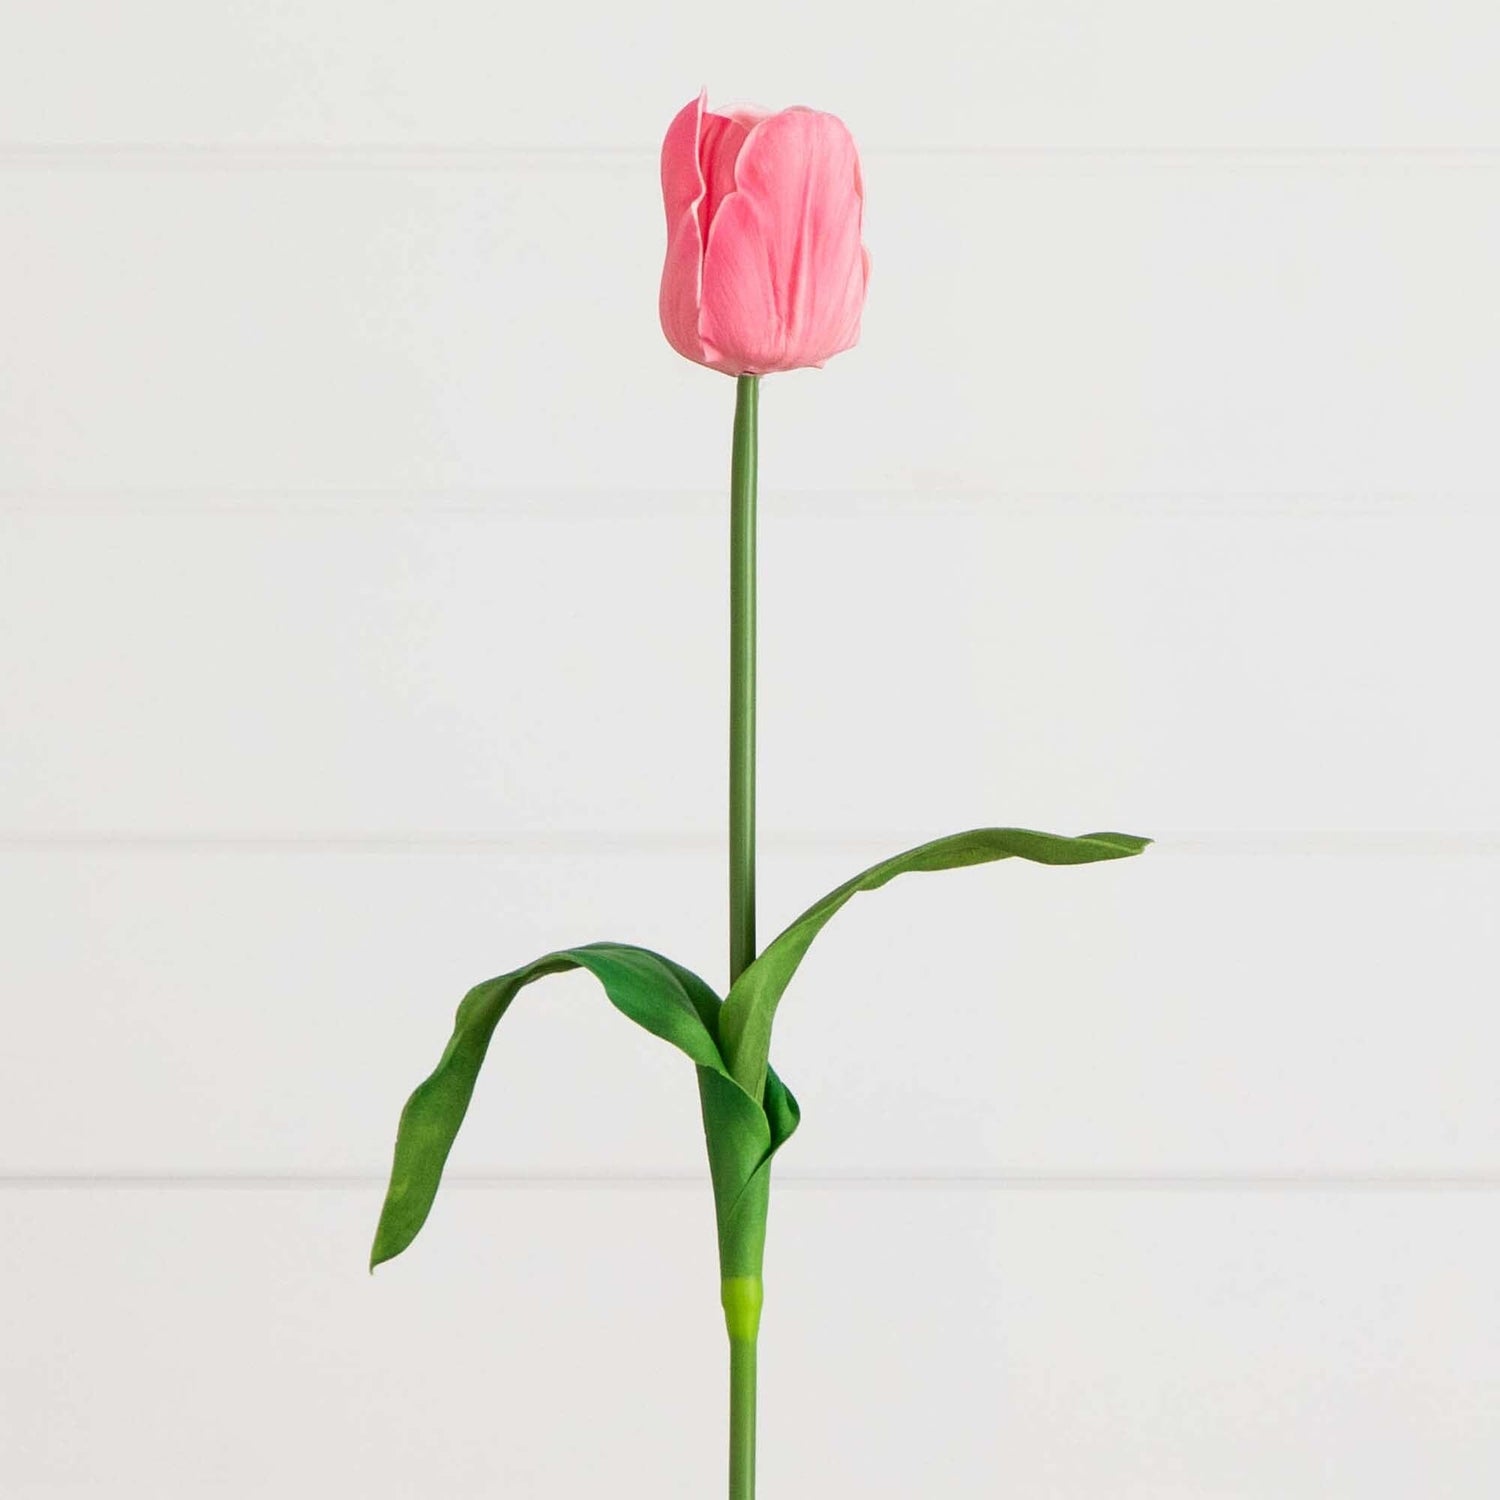 25" Artificial Tulip Flower Stems - Set of 3